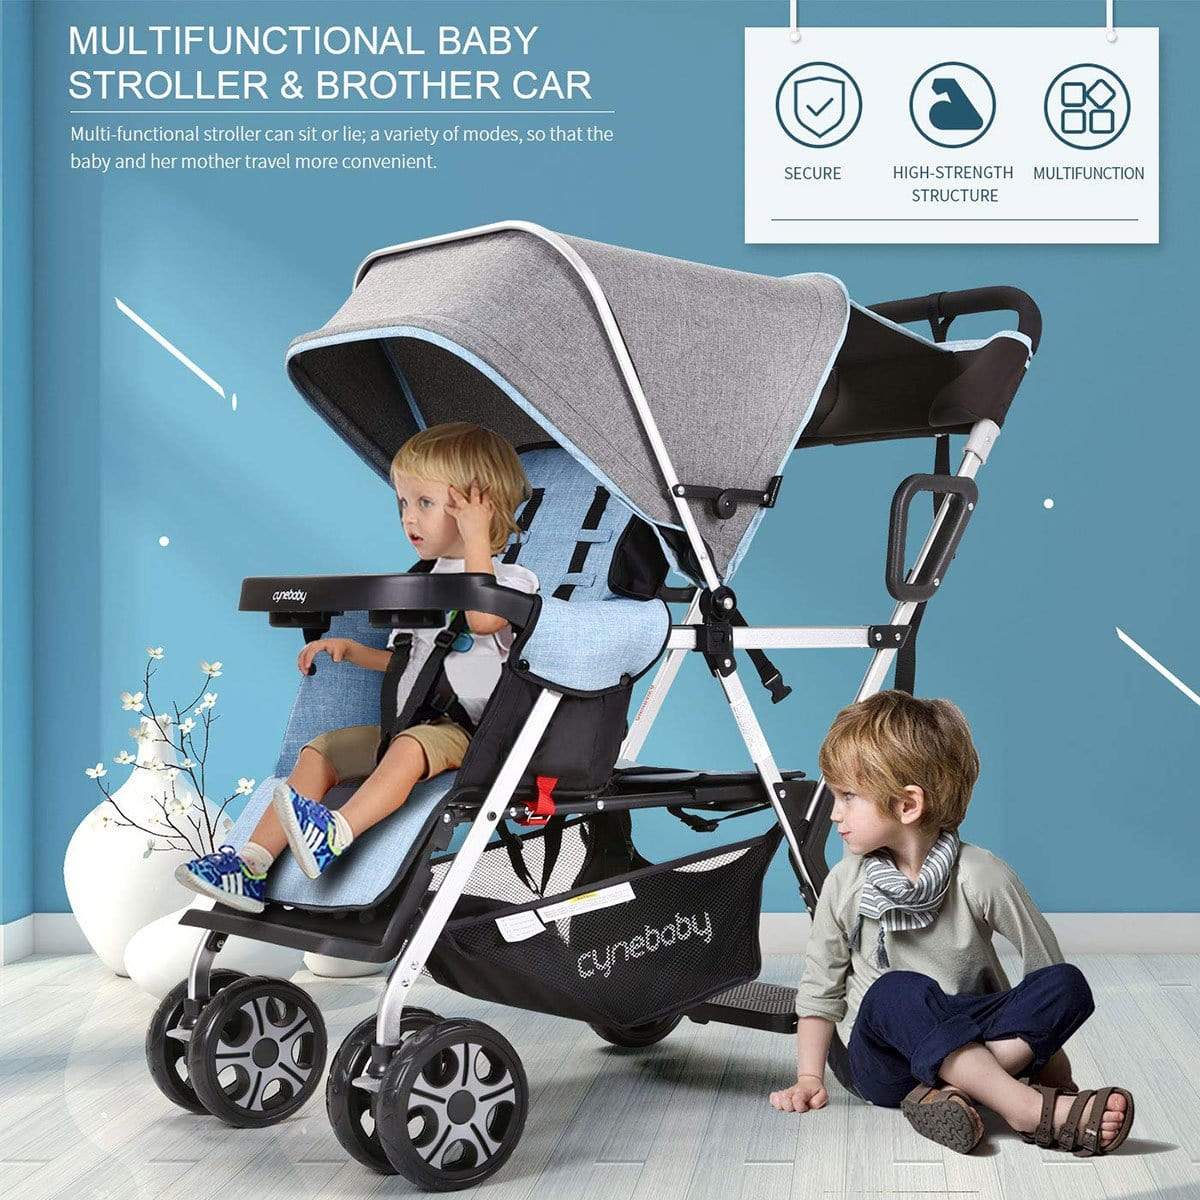 Proactive Baby Baby Pram Stroller cynebaby™ Baby Stroller For 2 babies - Grey